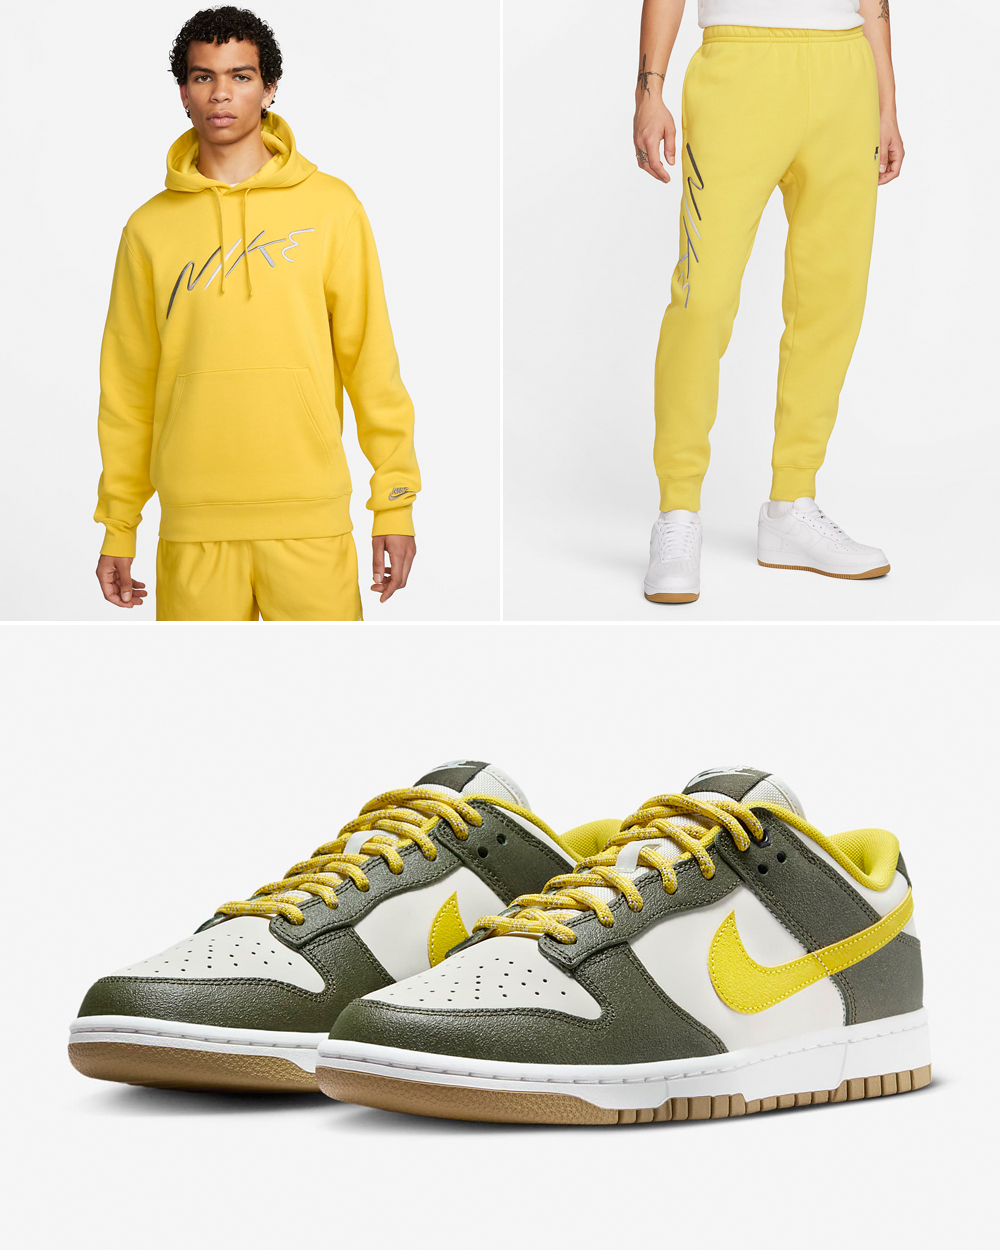 Nike-Dunk-Low-Cargo-Khaki-Vivid-Sulfur-Hoodie-Pants-Outfit